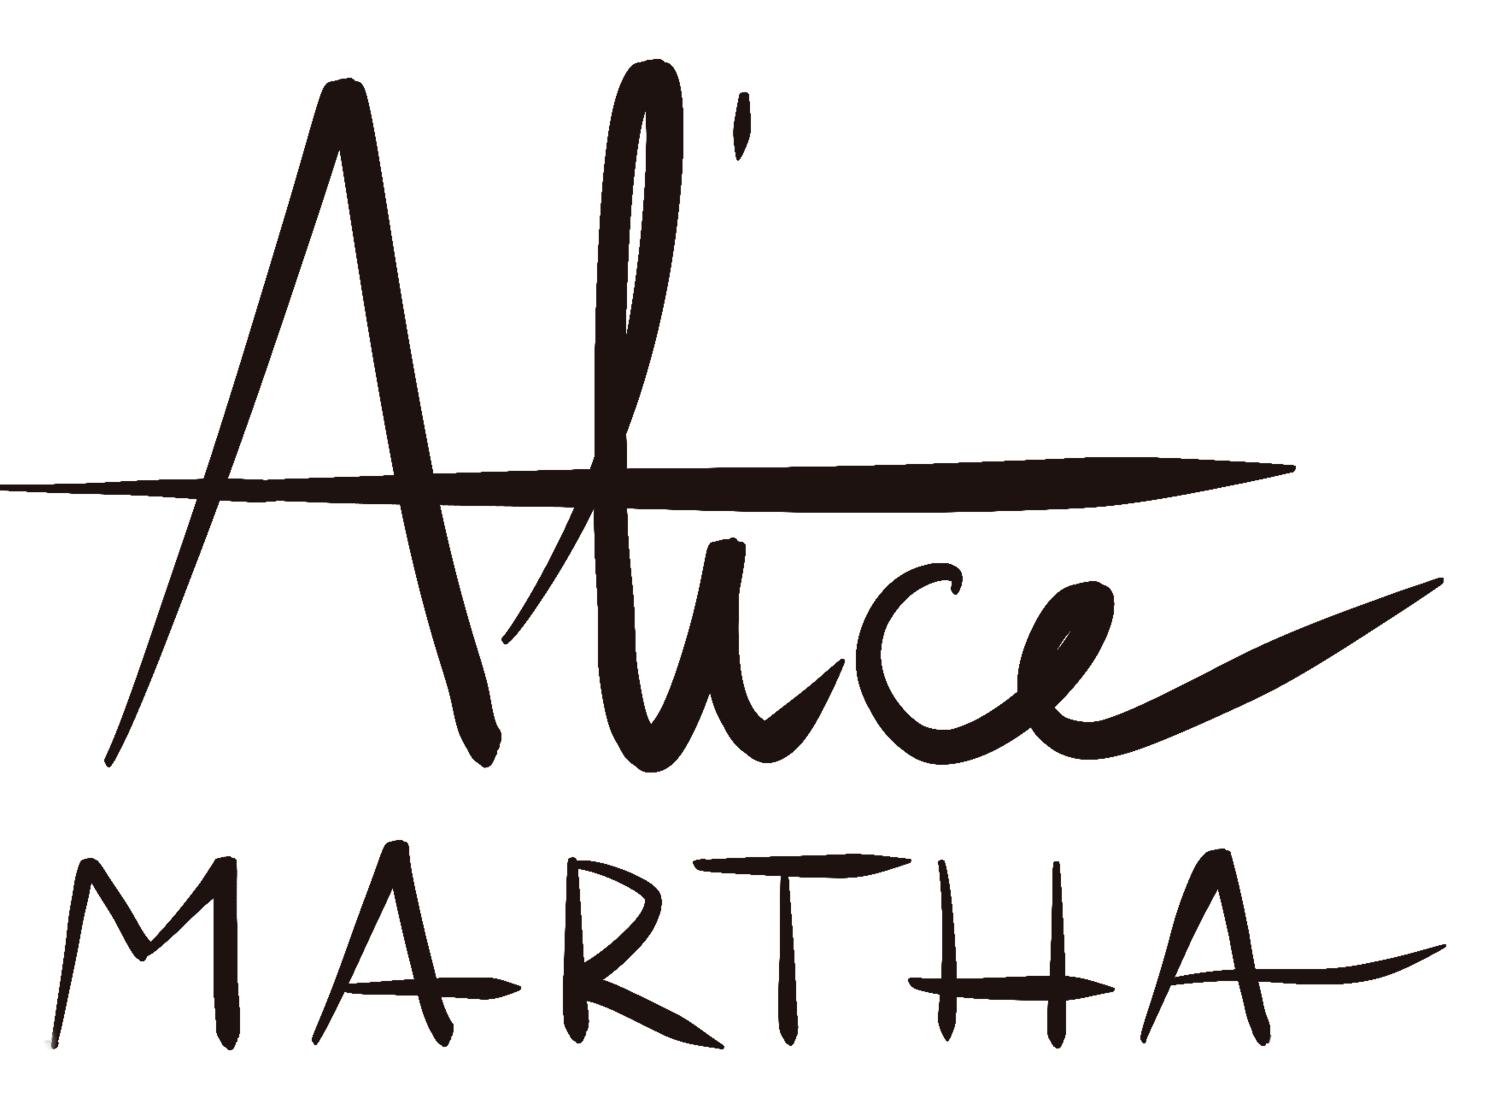 Alice Martha